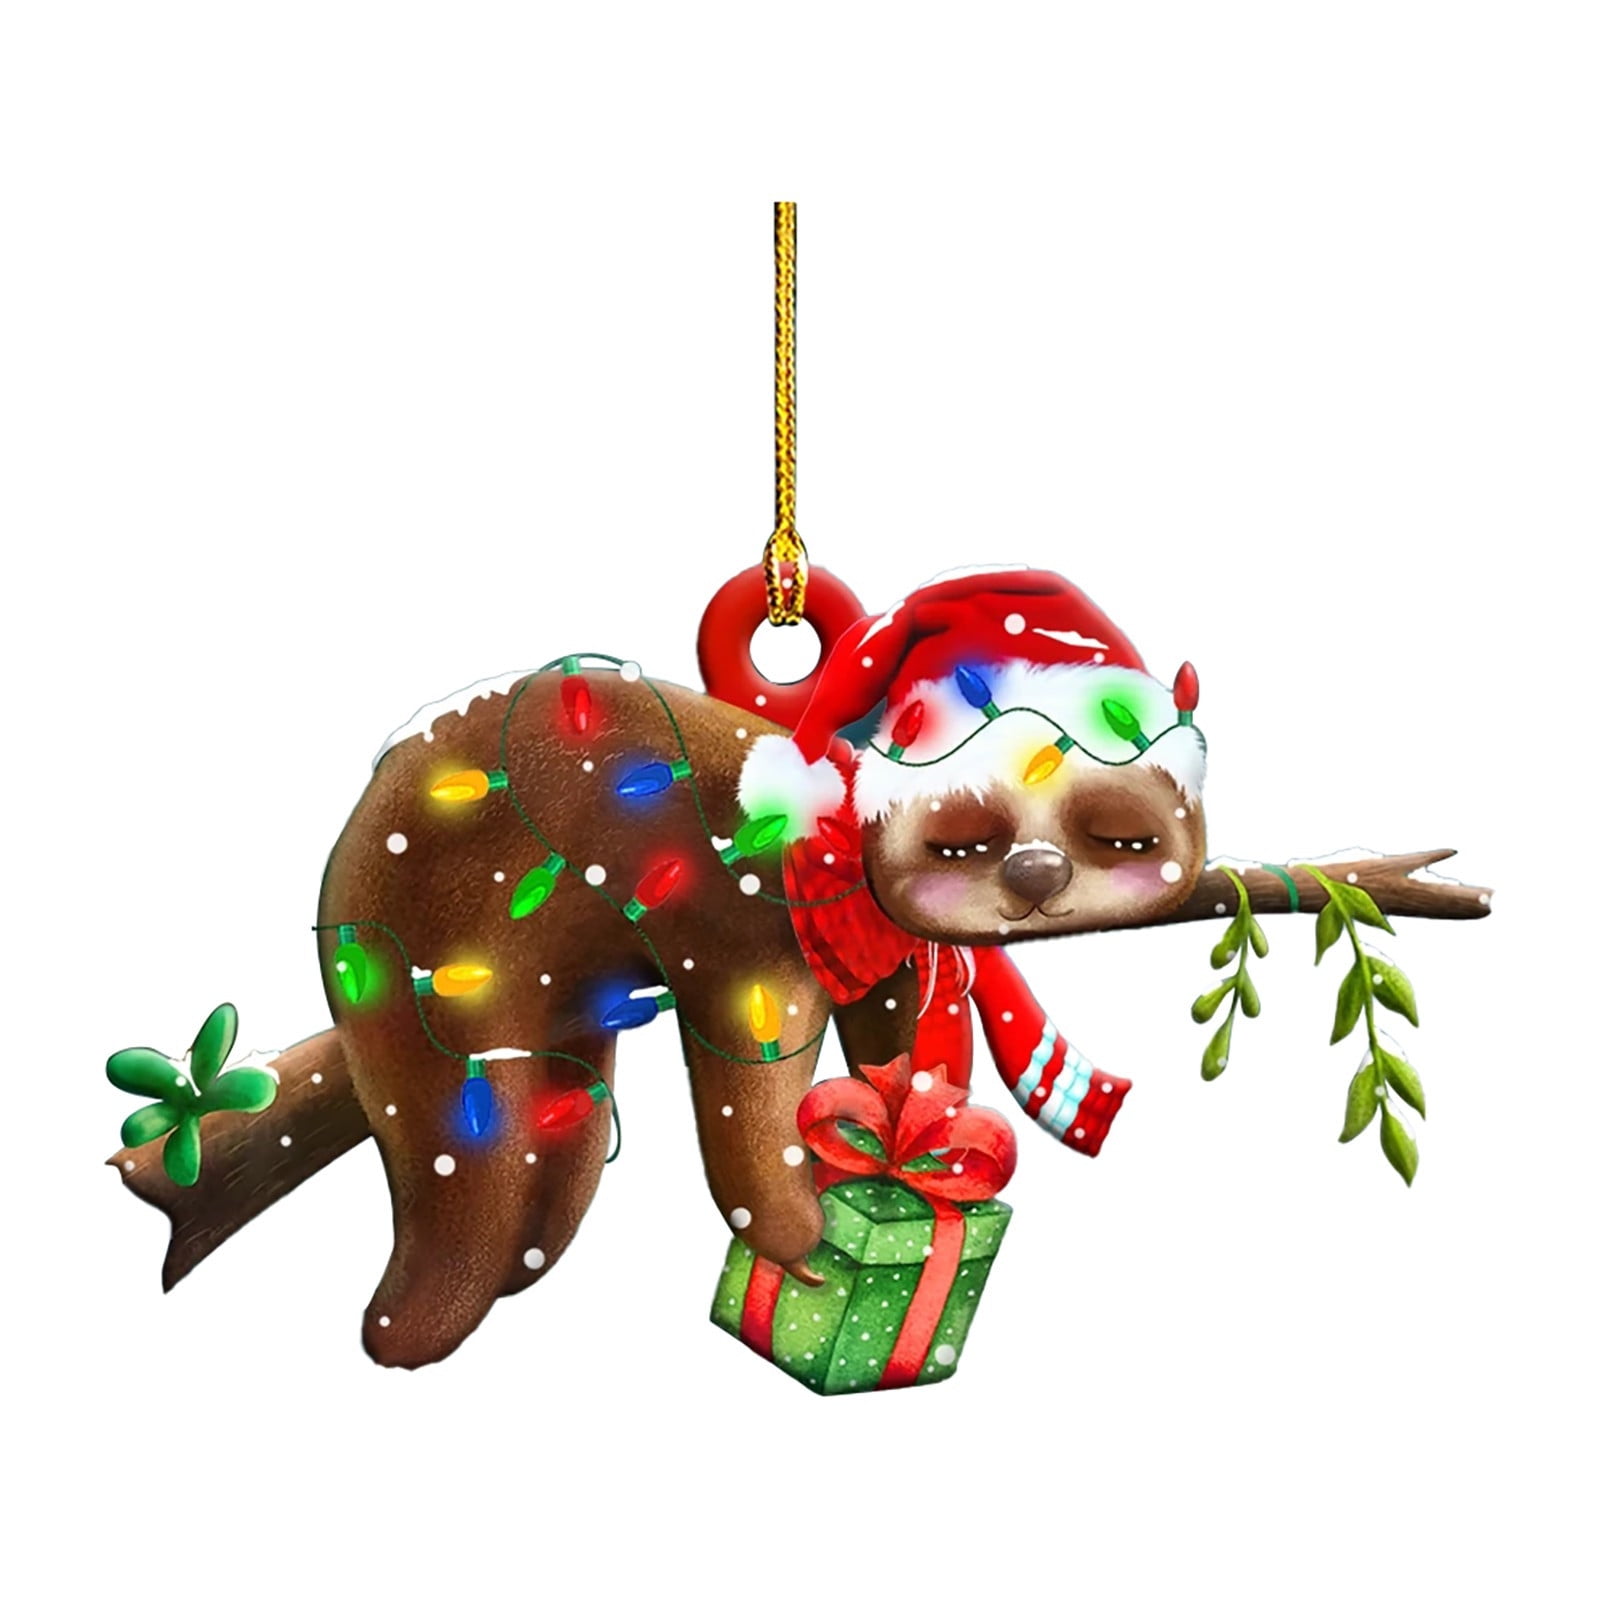 Details about   Kurt Adler Baby's 1st Christmas Boy Girl Ornament Resin Personalize Elephant Gir 